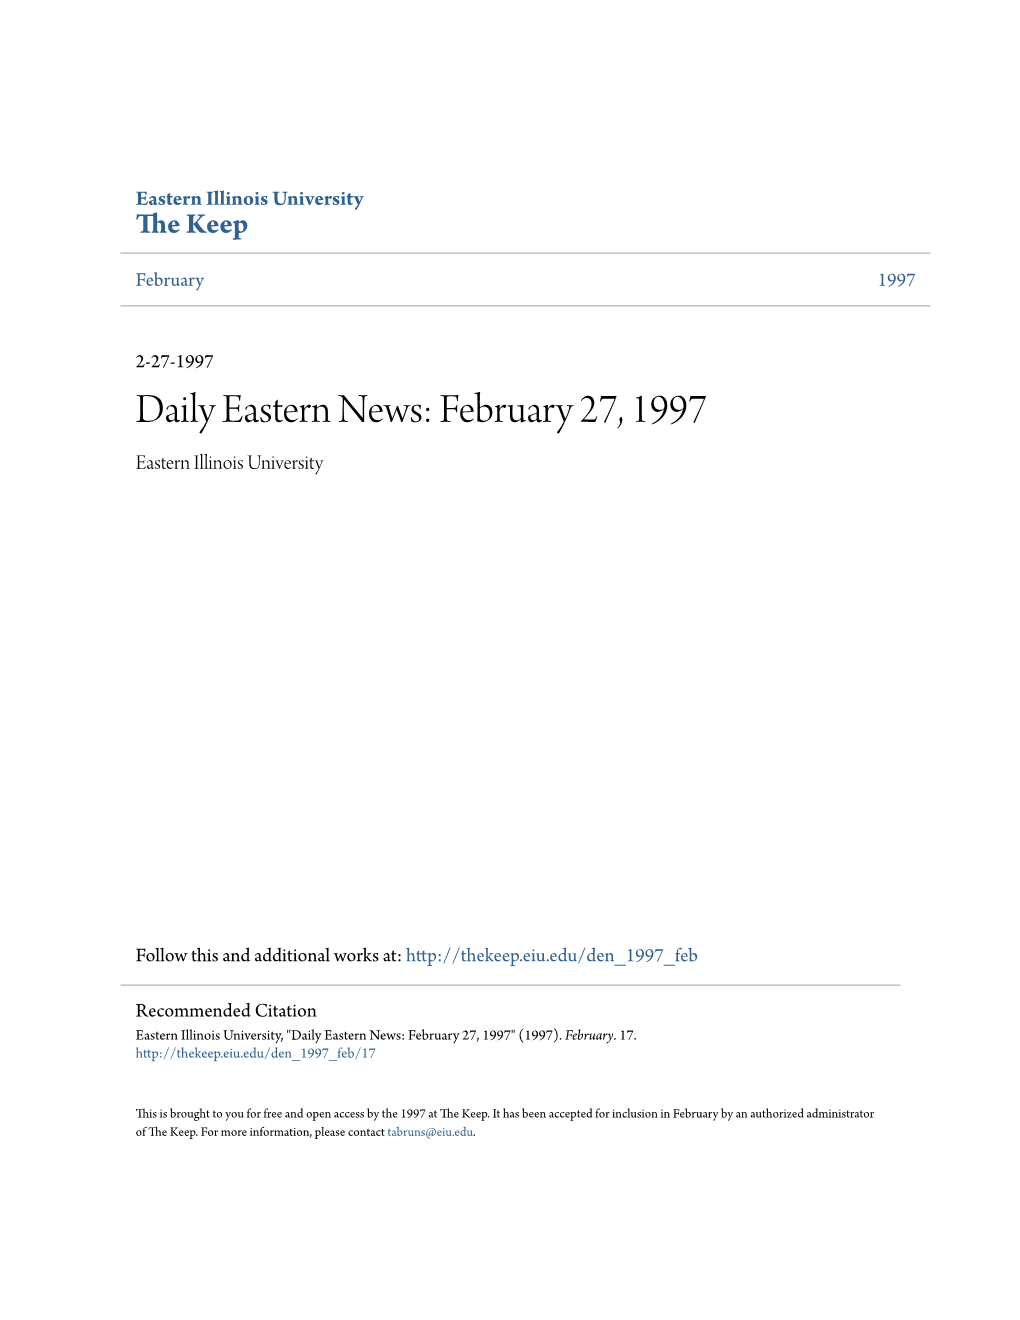 Daily Eastern News: February 27, 1997 Eastern Illinois University